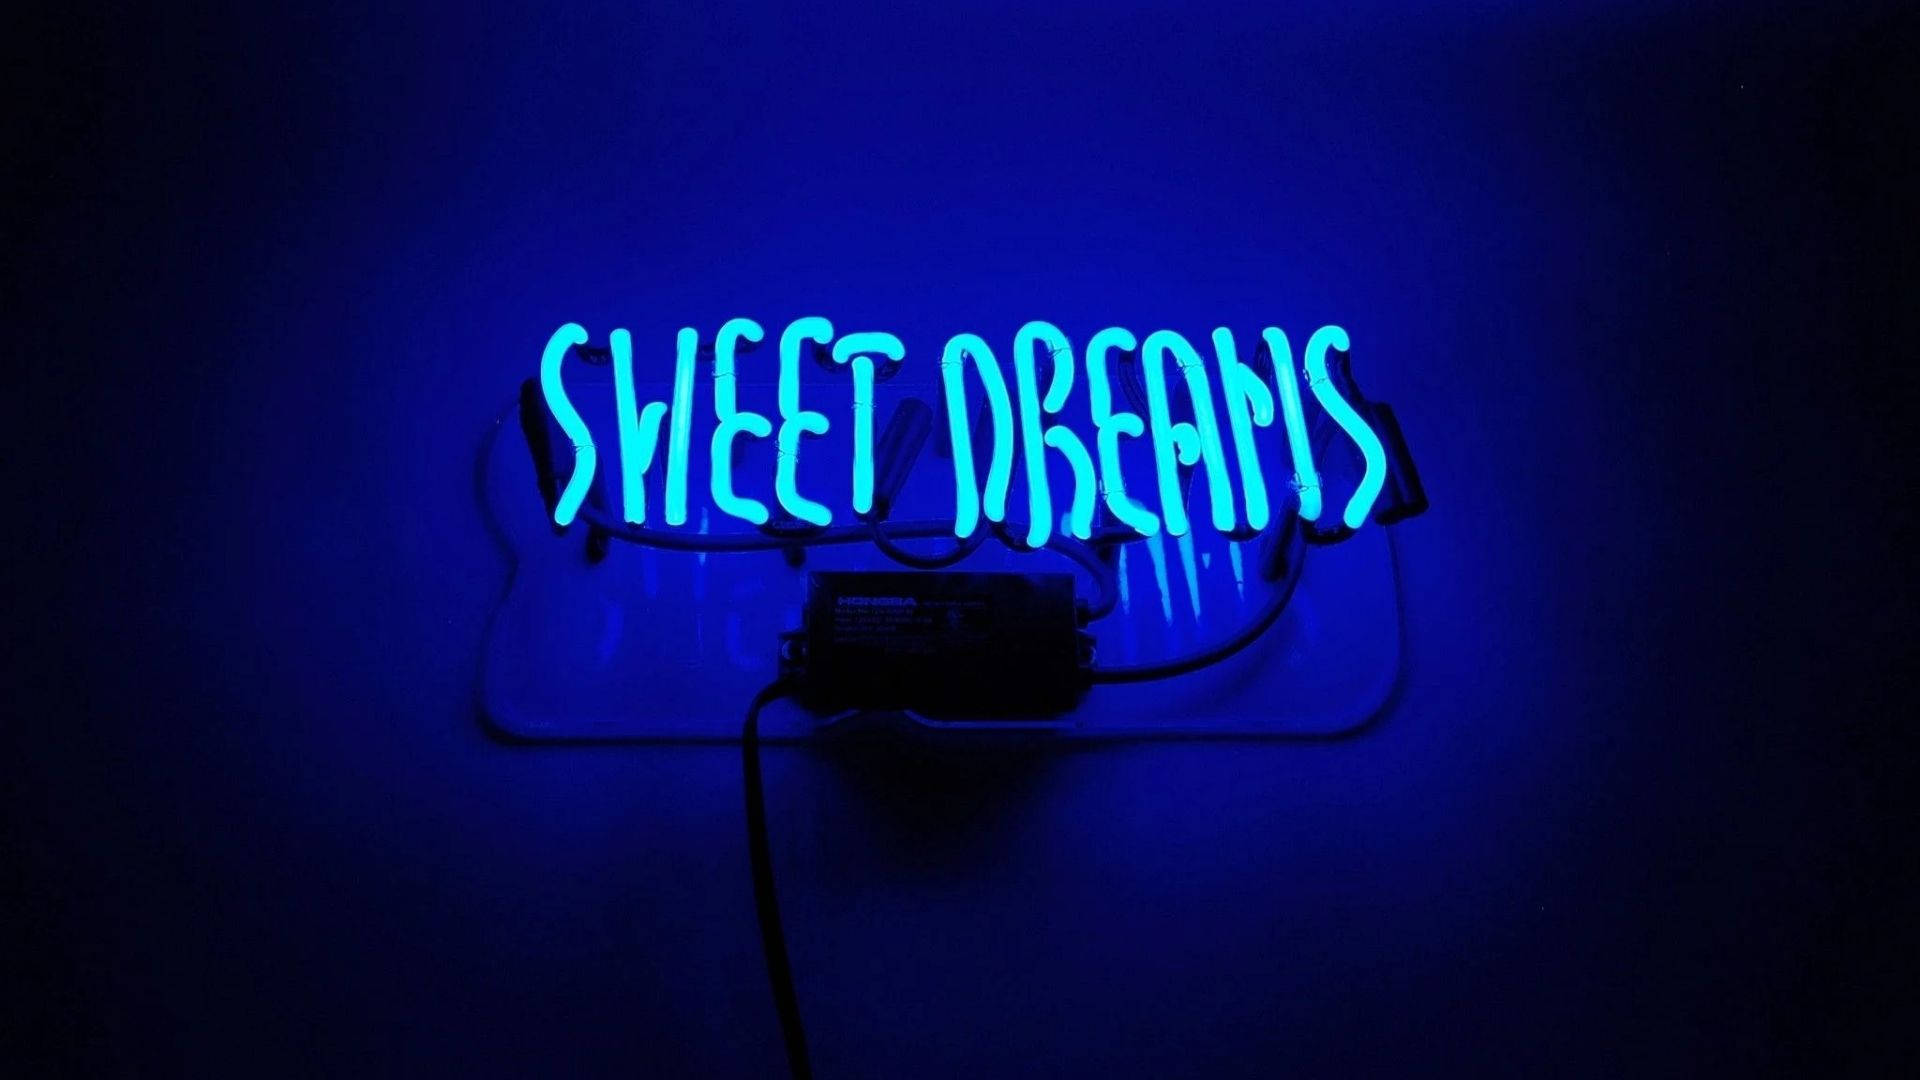 Sweet Dreams Led Light